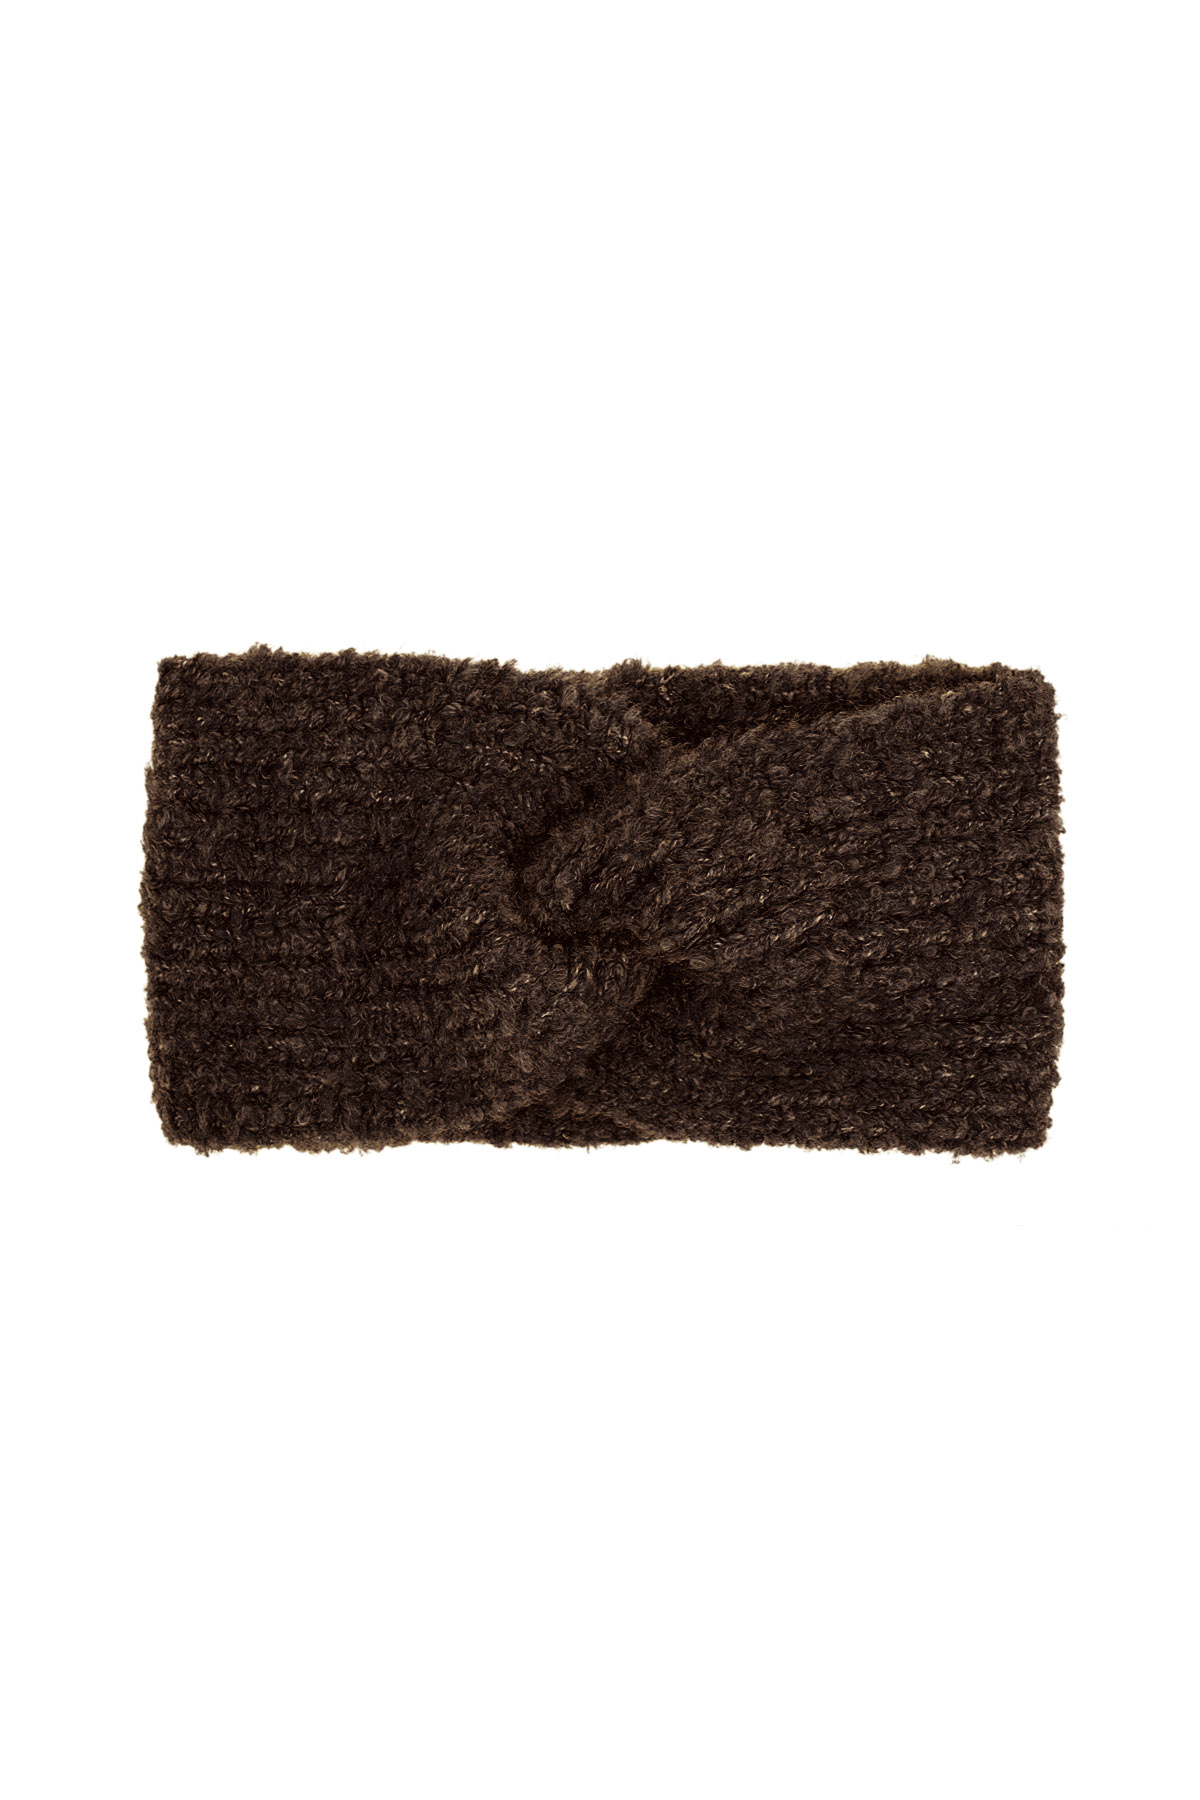 Knitted head warmer basic - brown h5 